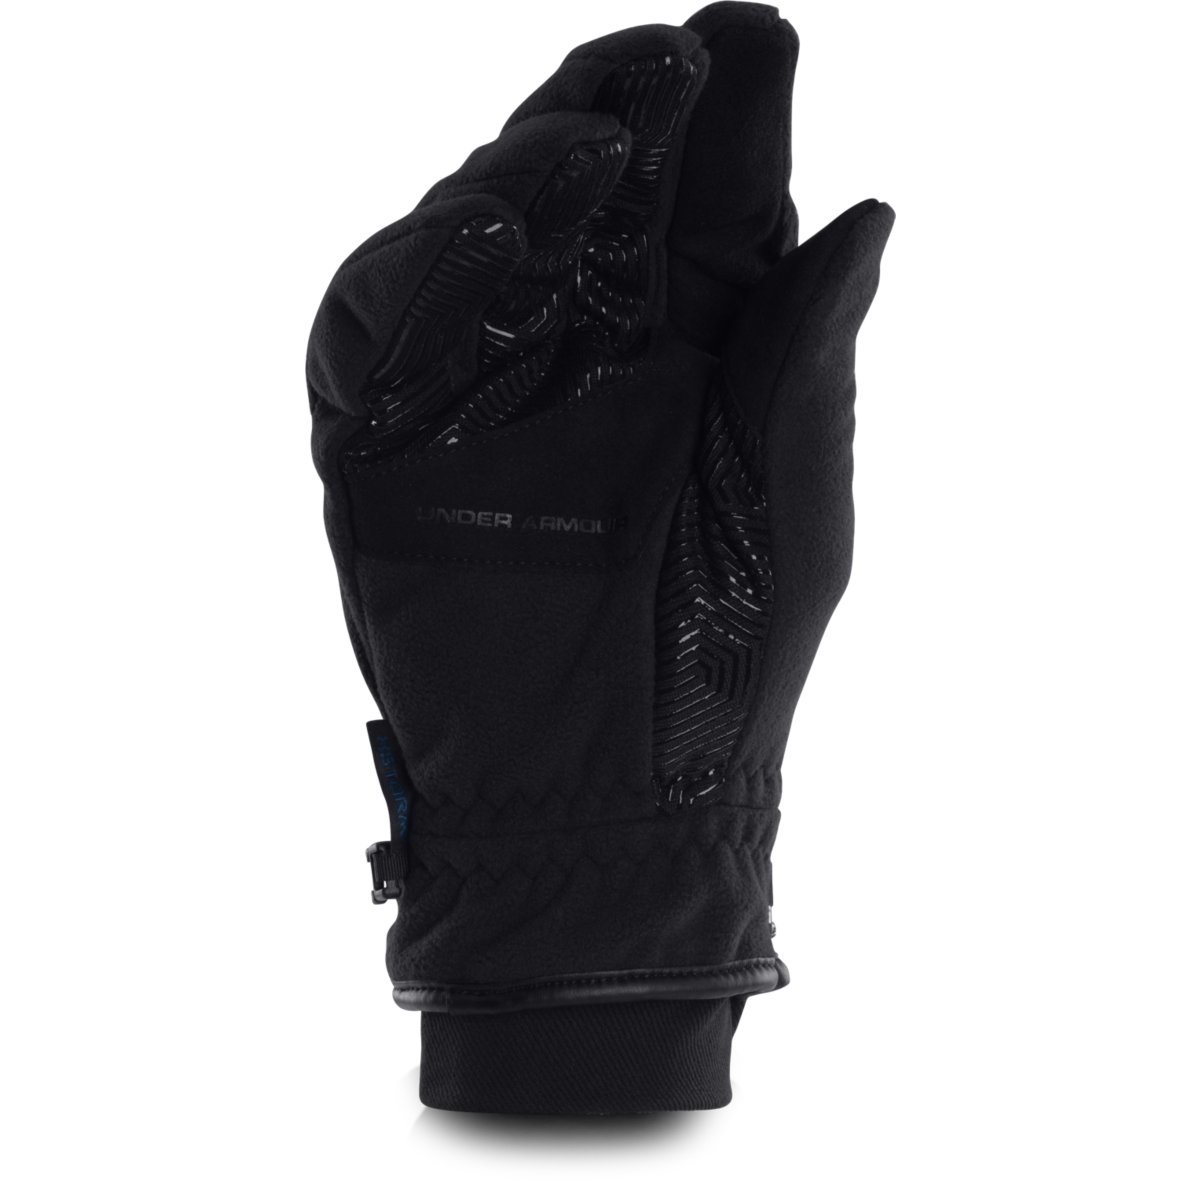 Under Armour Men's CGI Storm Convex Gloves